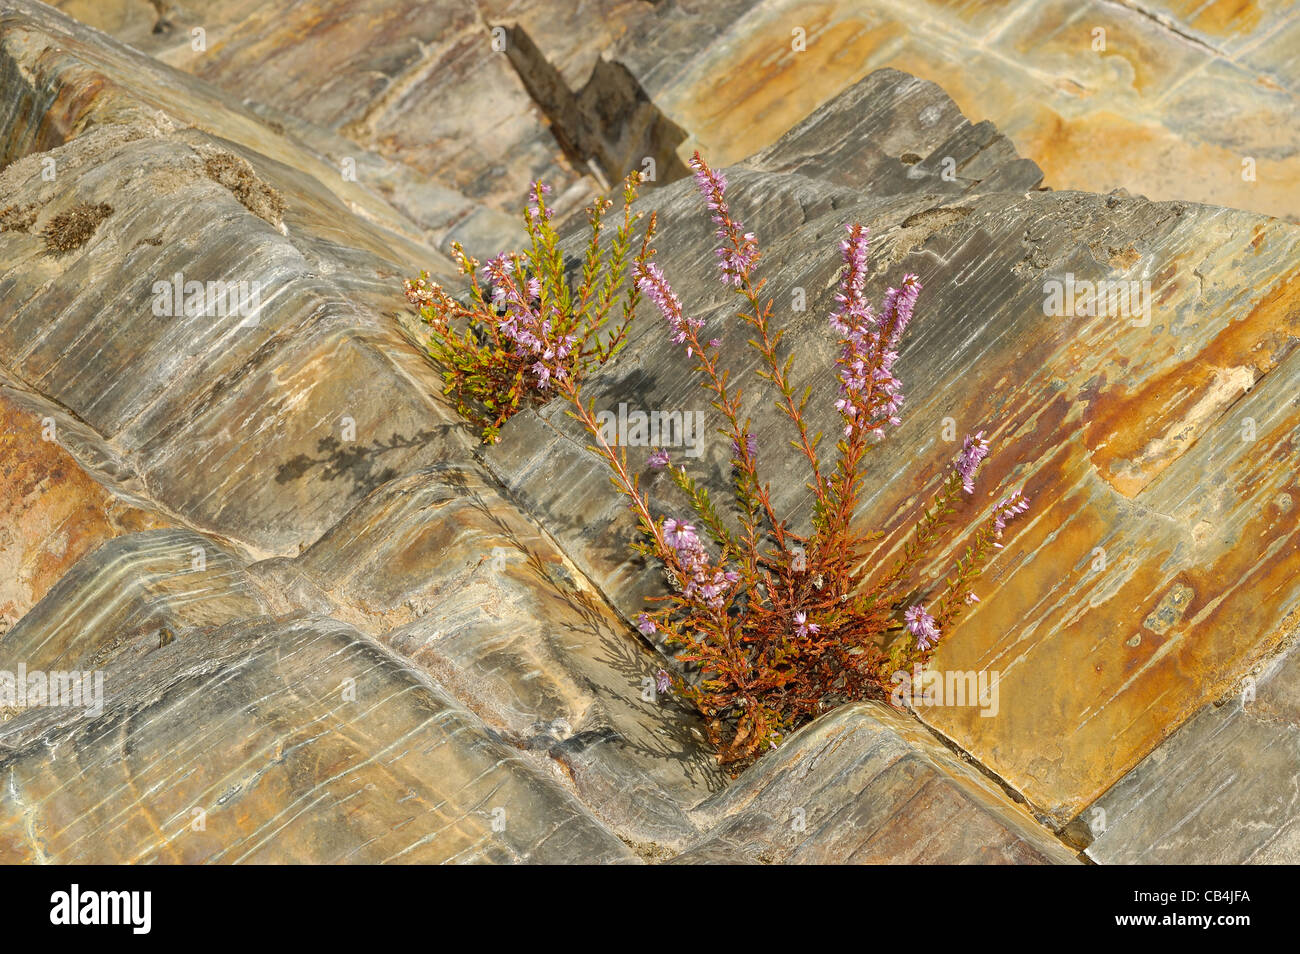 Common Heath (Calluna vulgaris) in harsh rocky environment Stock Photo